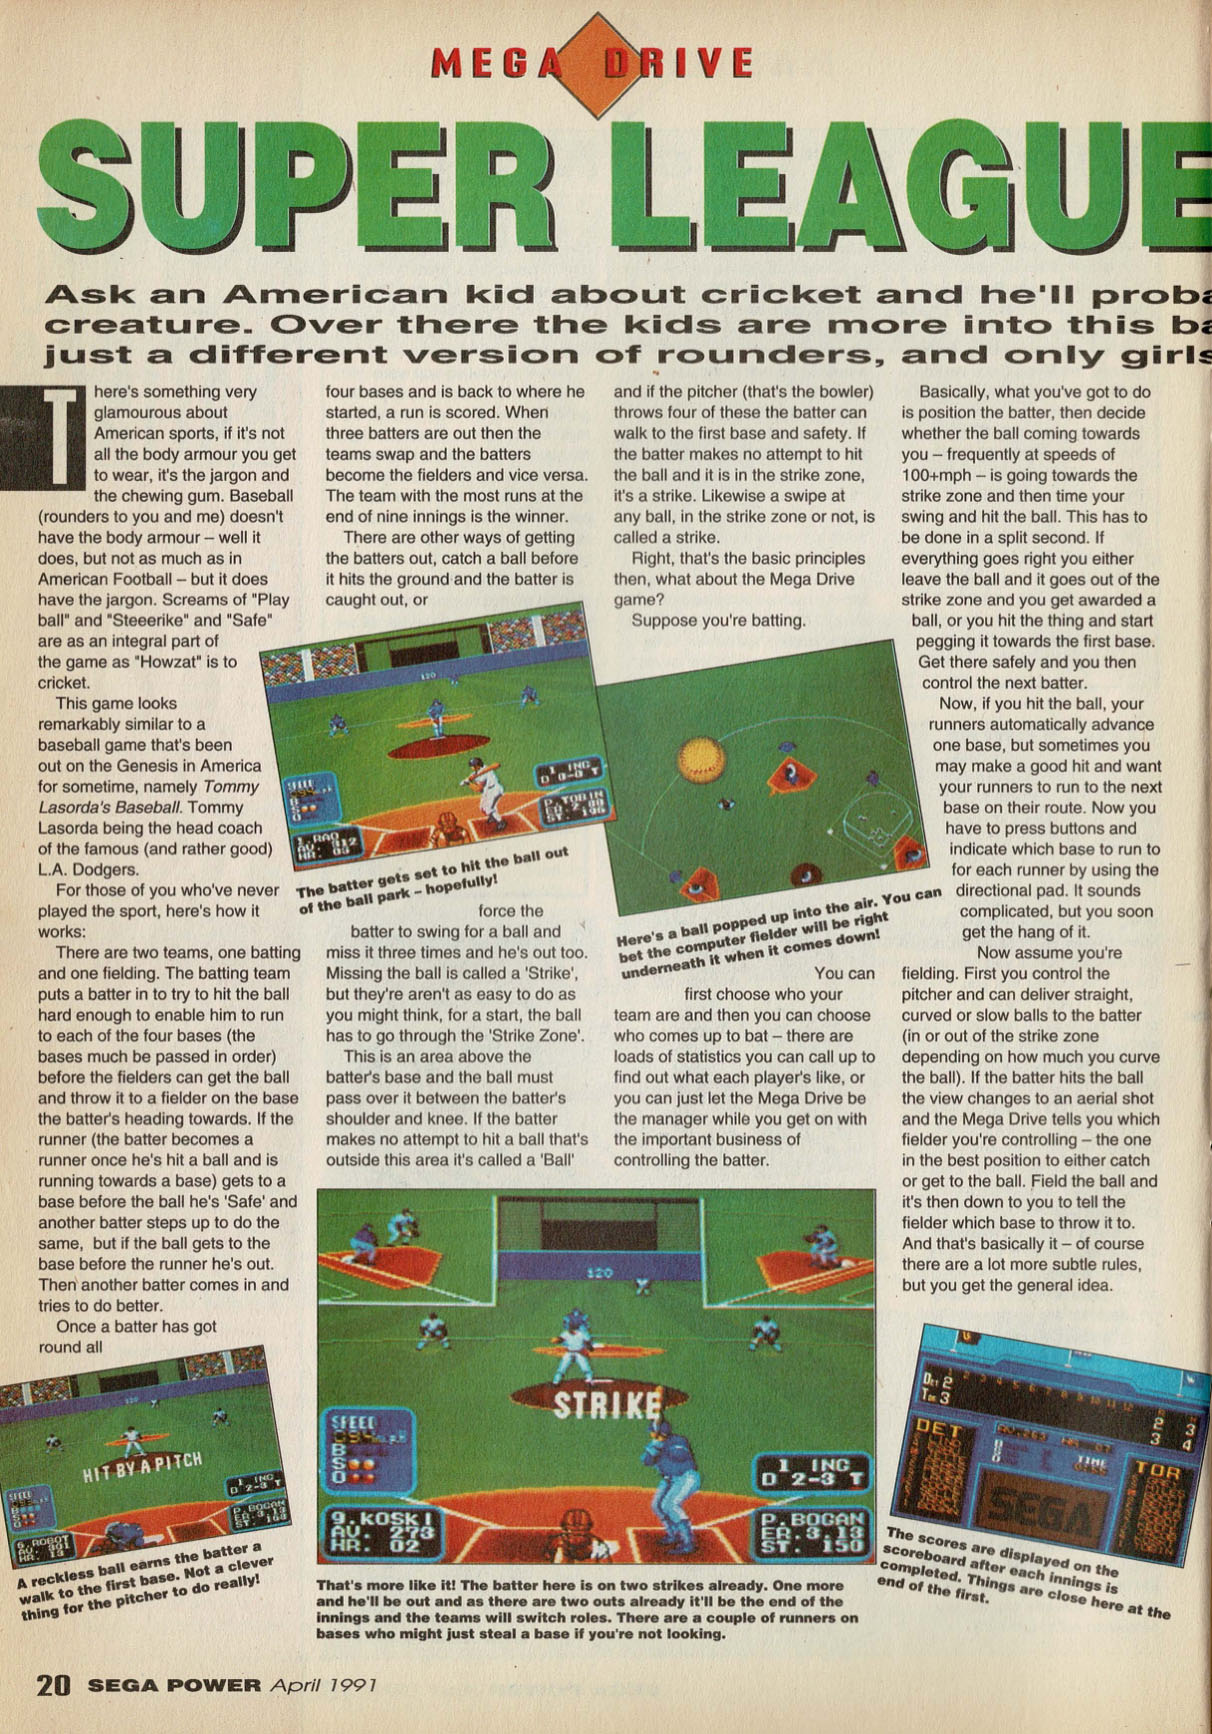 Super League Baseball Review, Sega Power April 1991 page 20